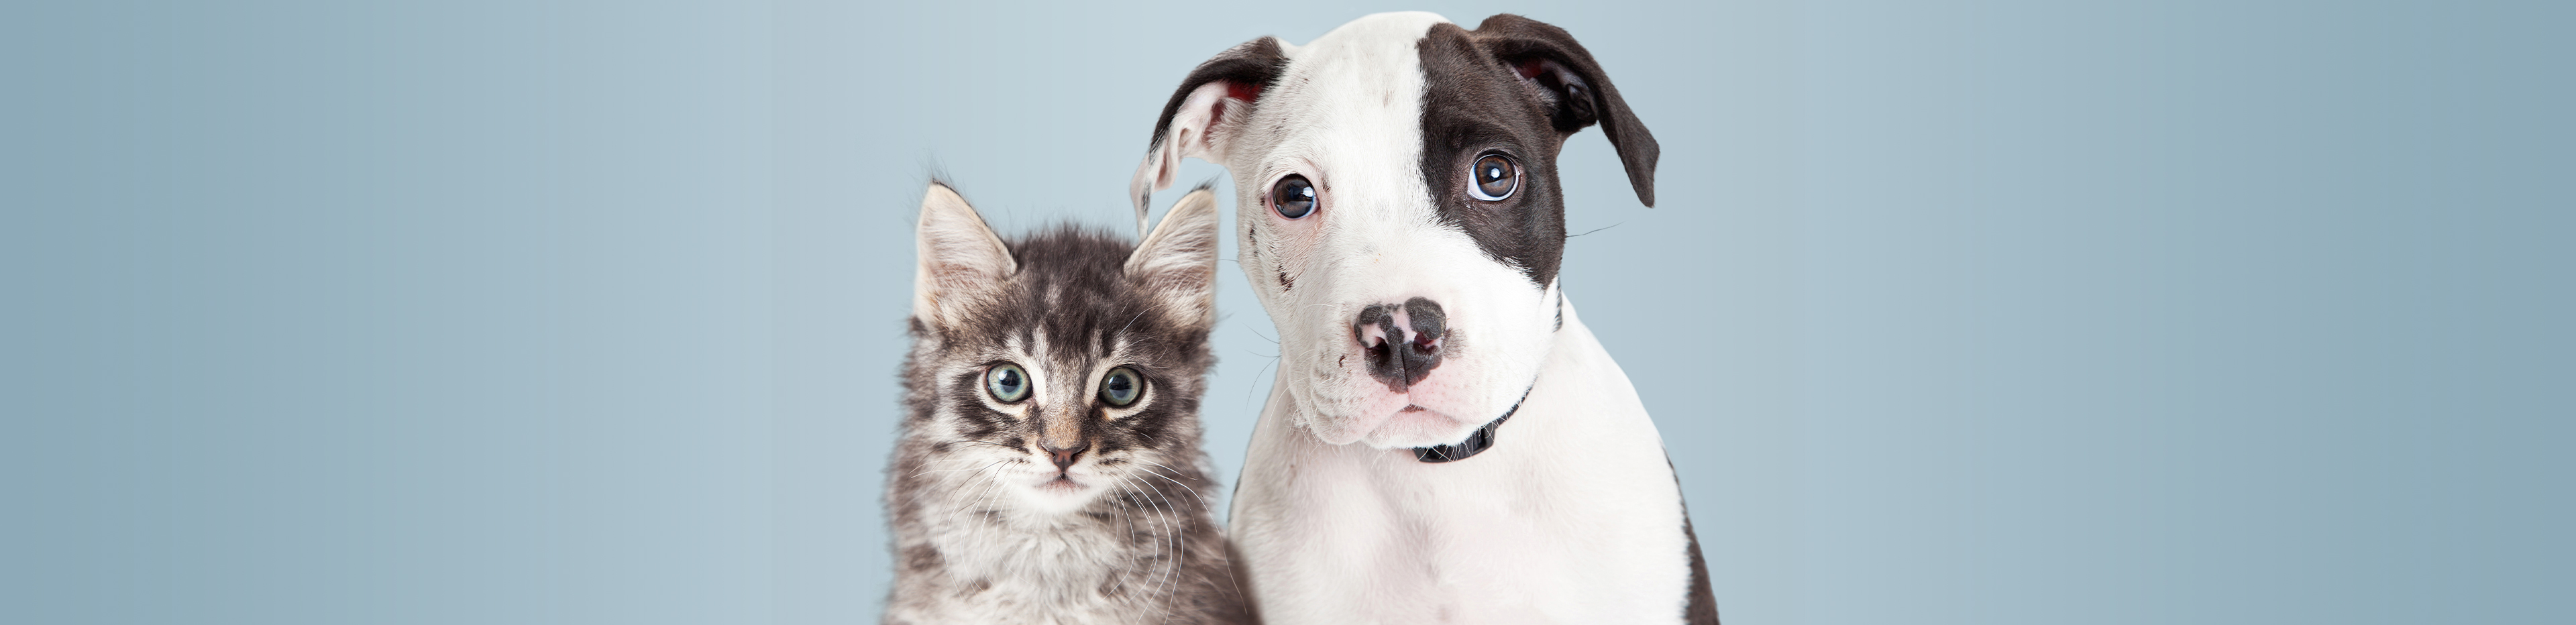 Pet Insurance Vet Bill Cover for Pets Pet Costs